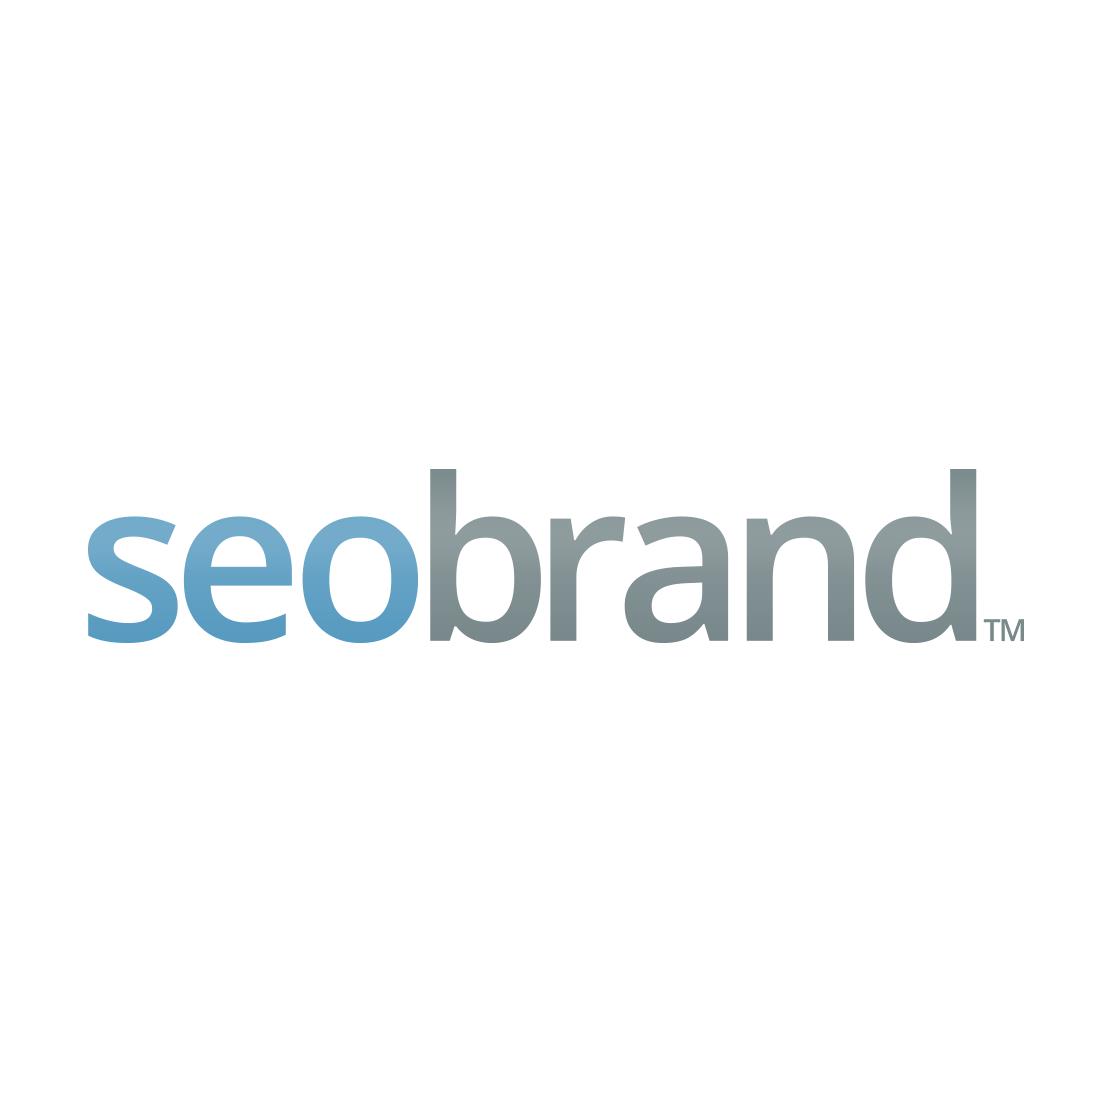 Best Search Engine Optimization Firm Logo: SEO Brand